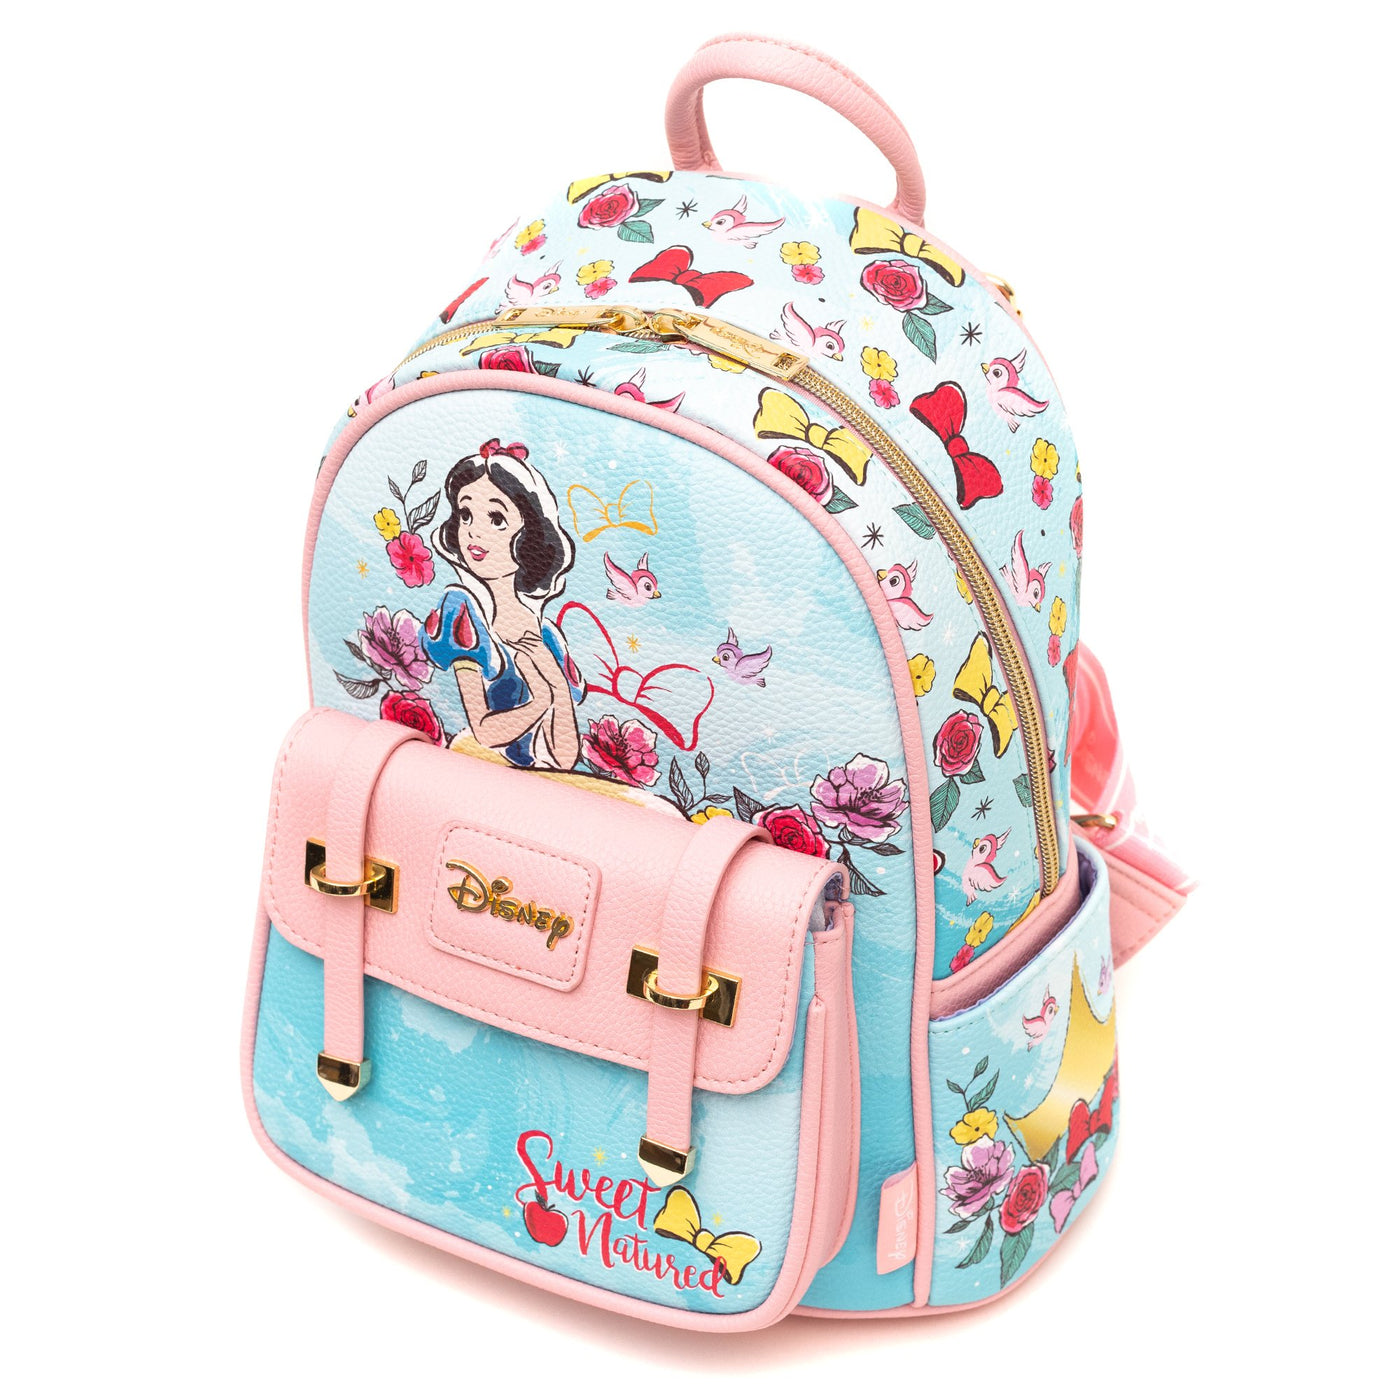 WondaPop Disney Snow White Mini Backpack - Top View